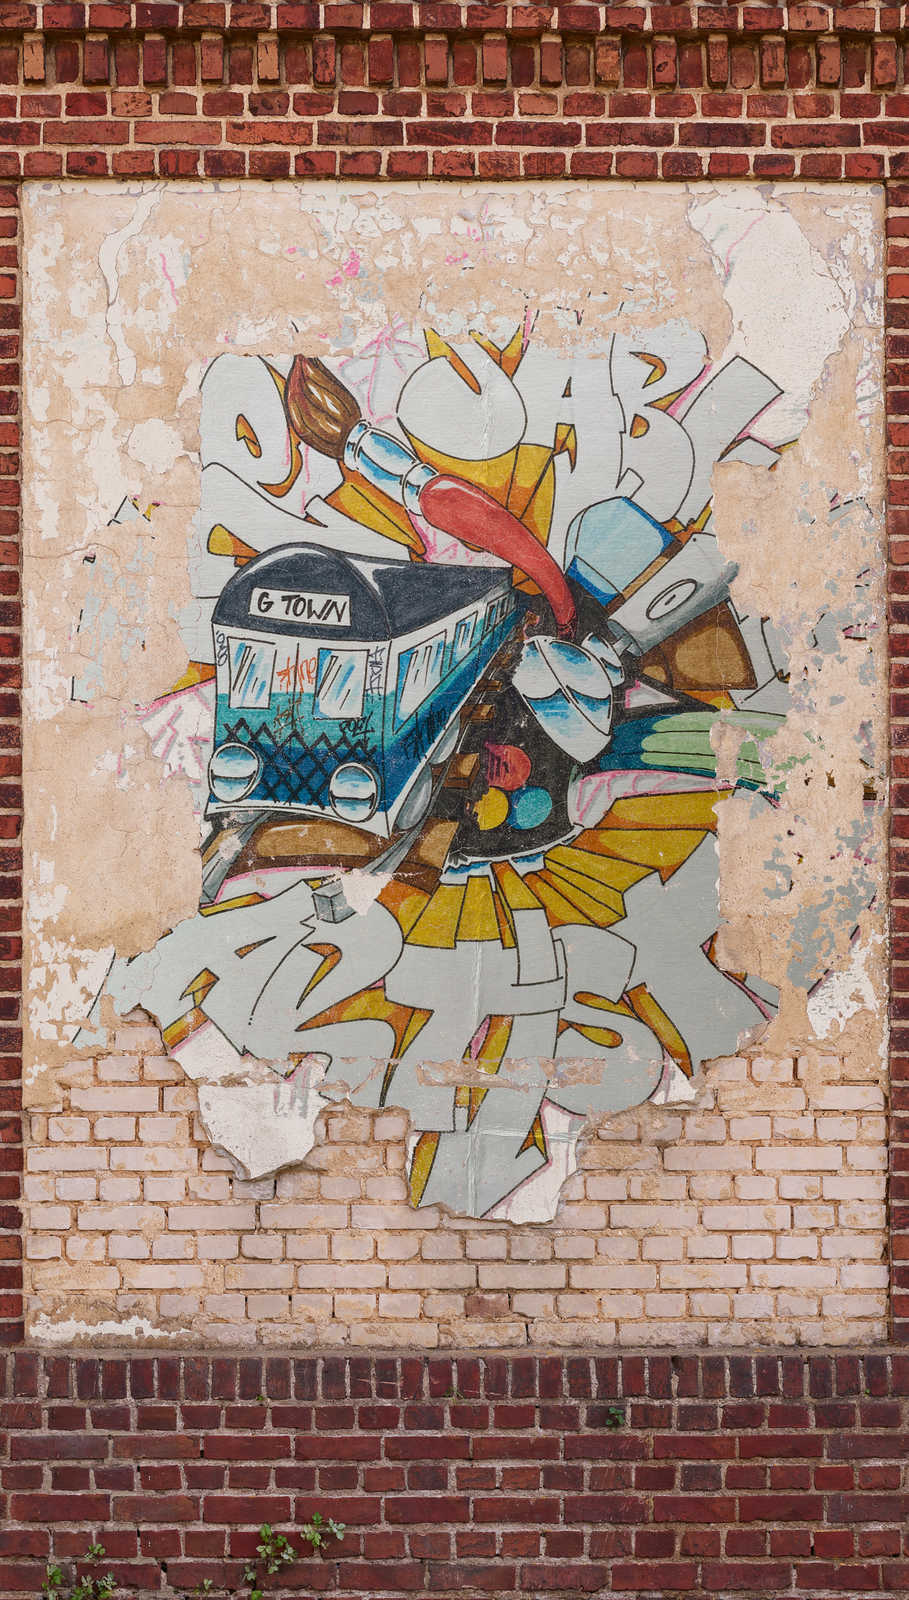             Brick Wall Optics Onderlaag behang met Bonte Graffiti - Bruin, Beige, Rood
        